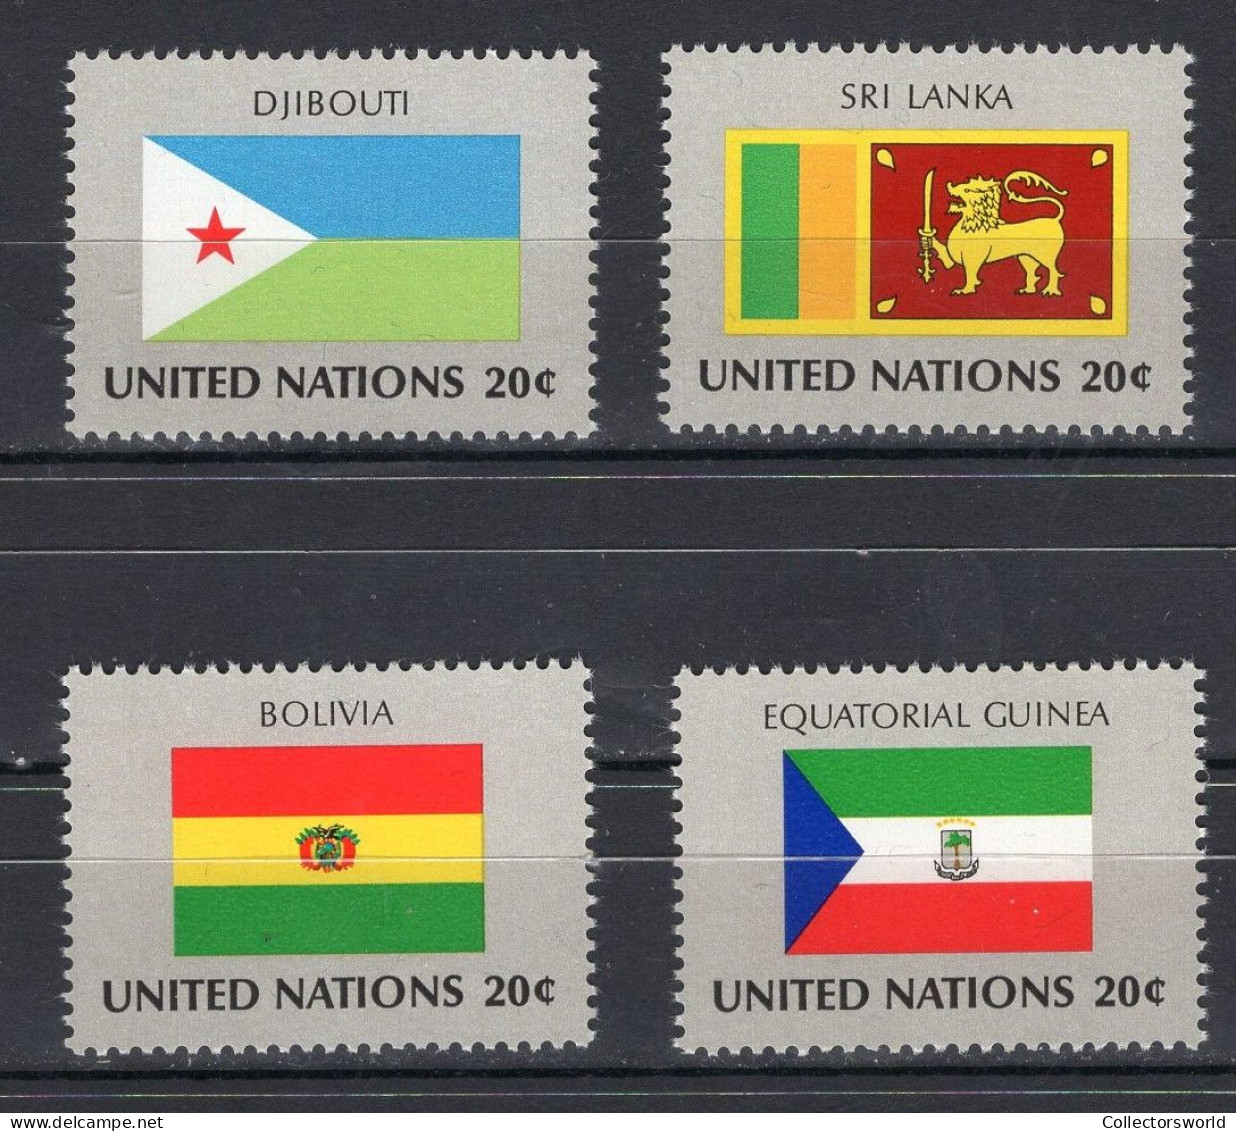 United Nations UN New York Serie 4v 1981 Flag Serie Sri Lanka Djibouti Bolivia Equatorial Guinea MNH - Unused Stamps